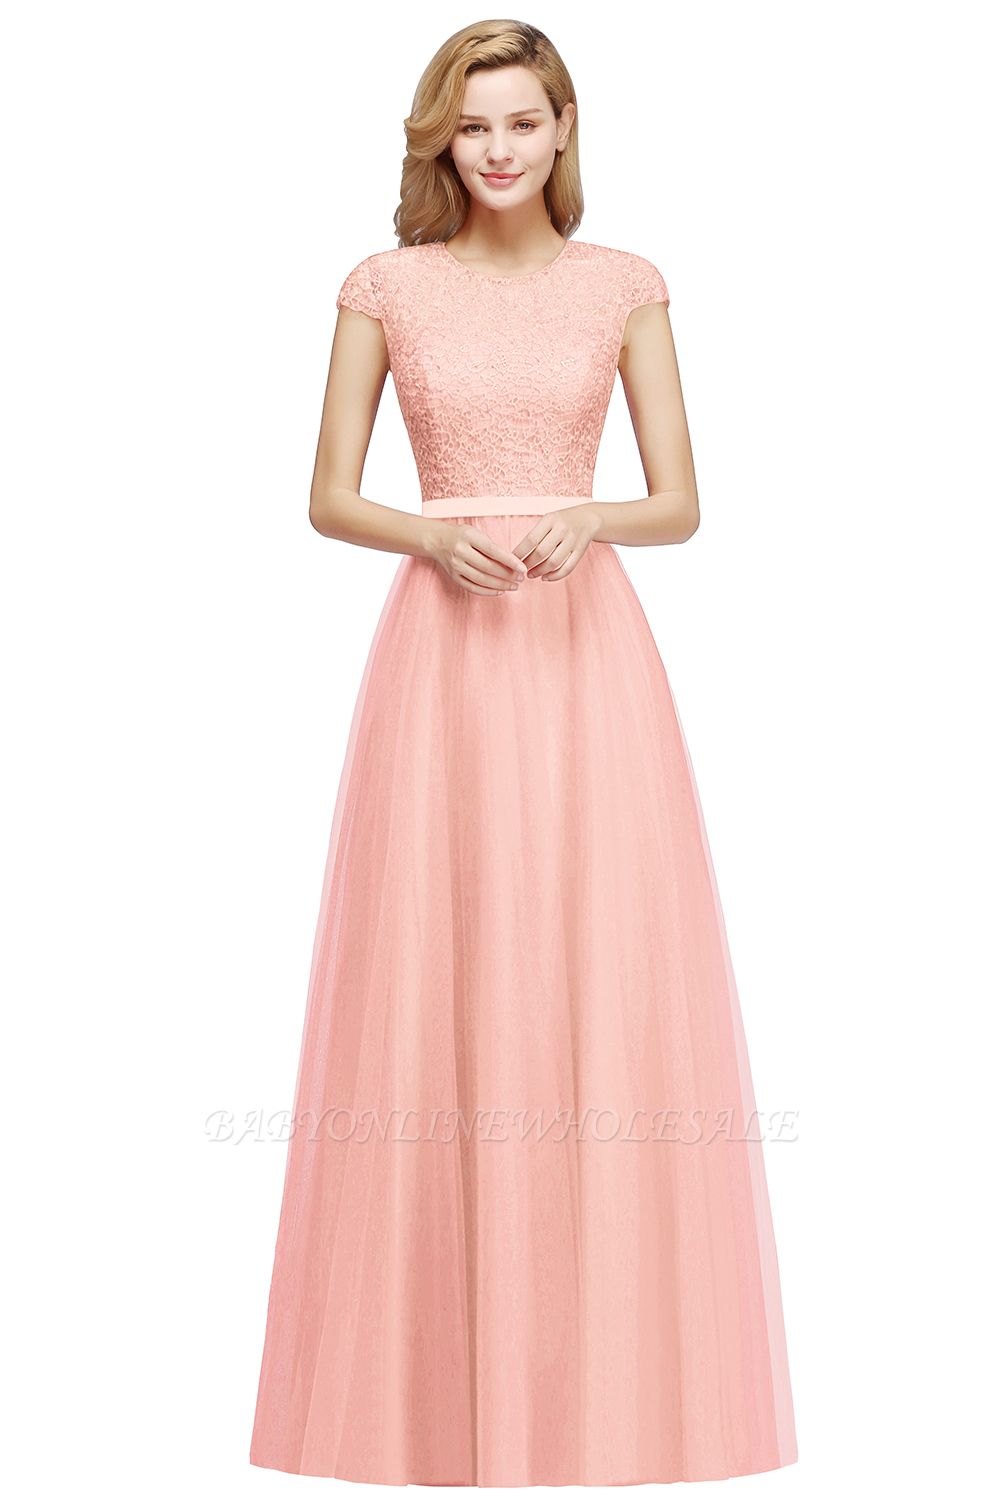 Elegant Lace Top Cap Sleeves Long Tulle Bridesmaid Dresses